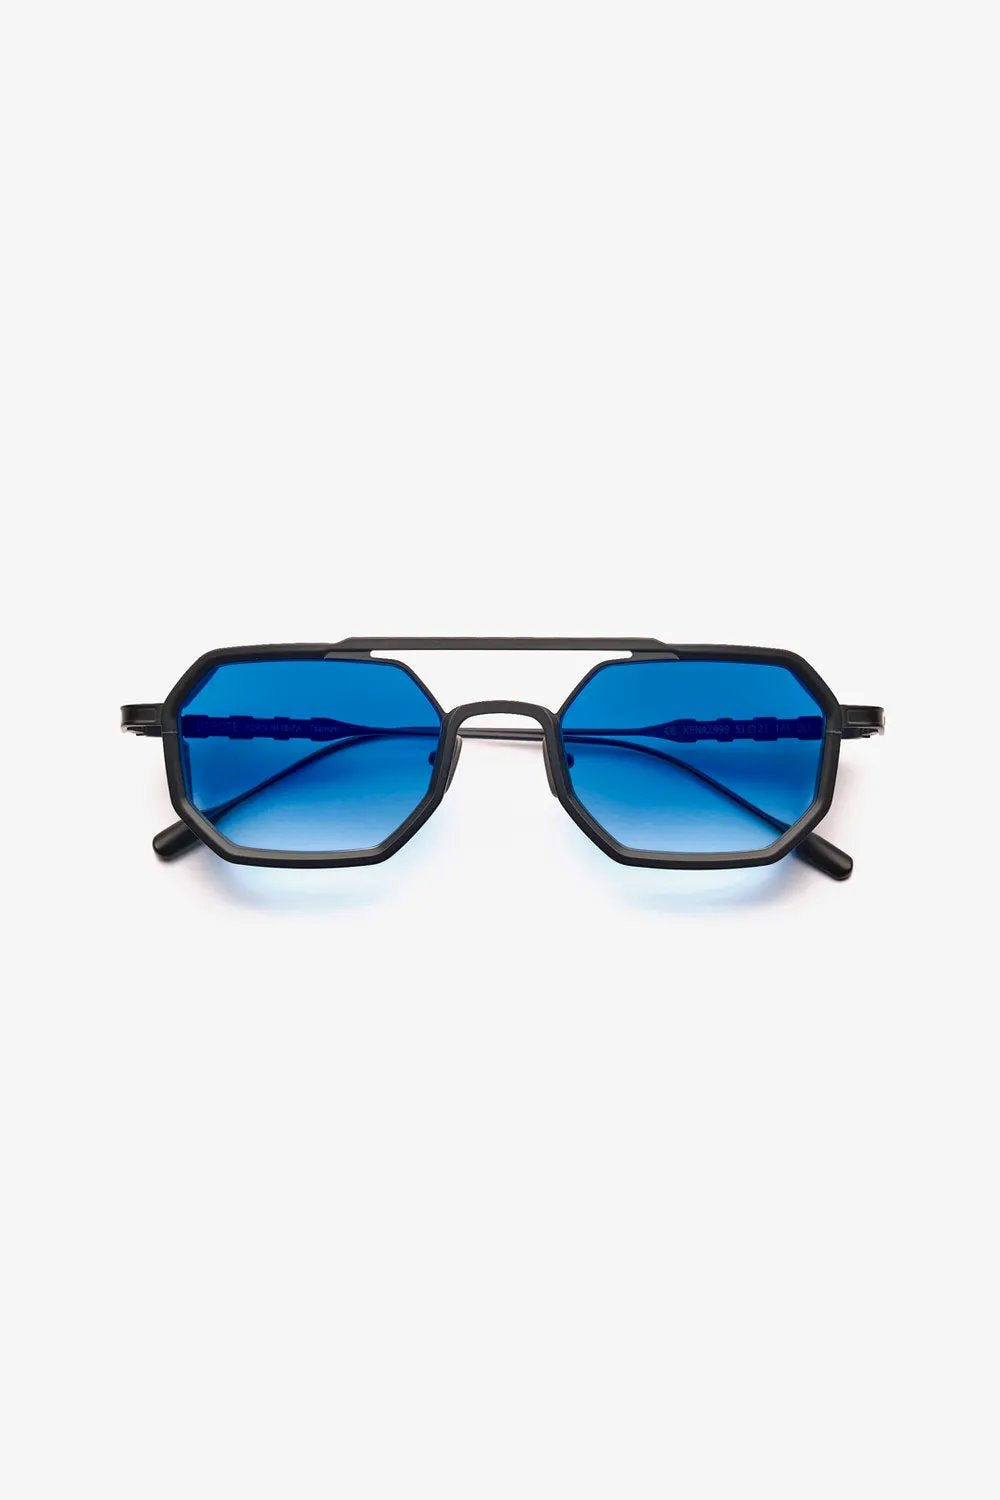 Capote - KENAZ999 Sunglasses Capote Blue ONES 